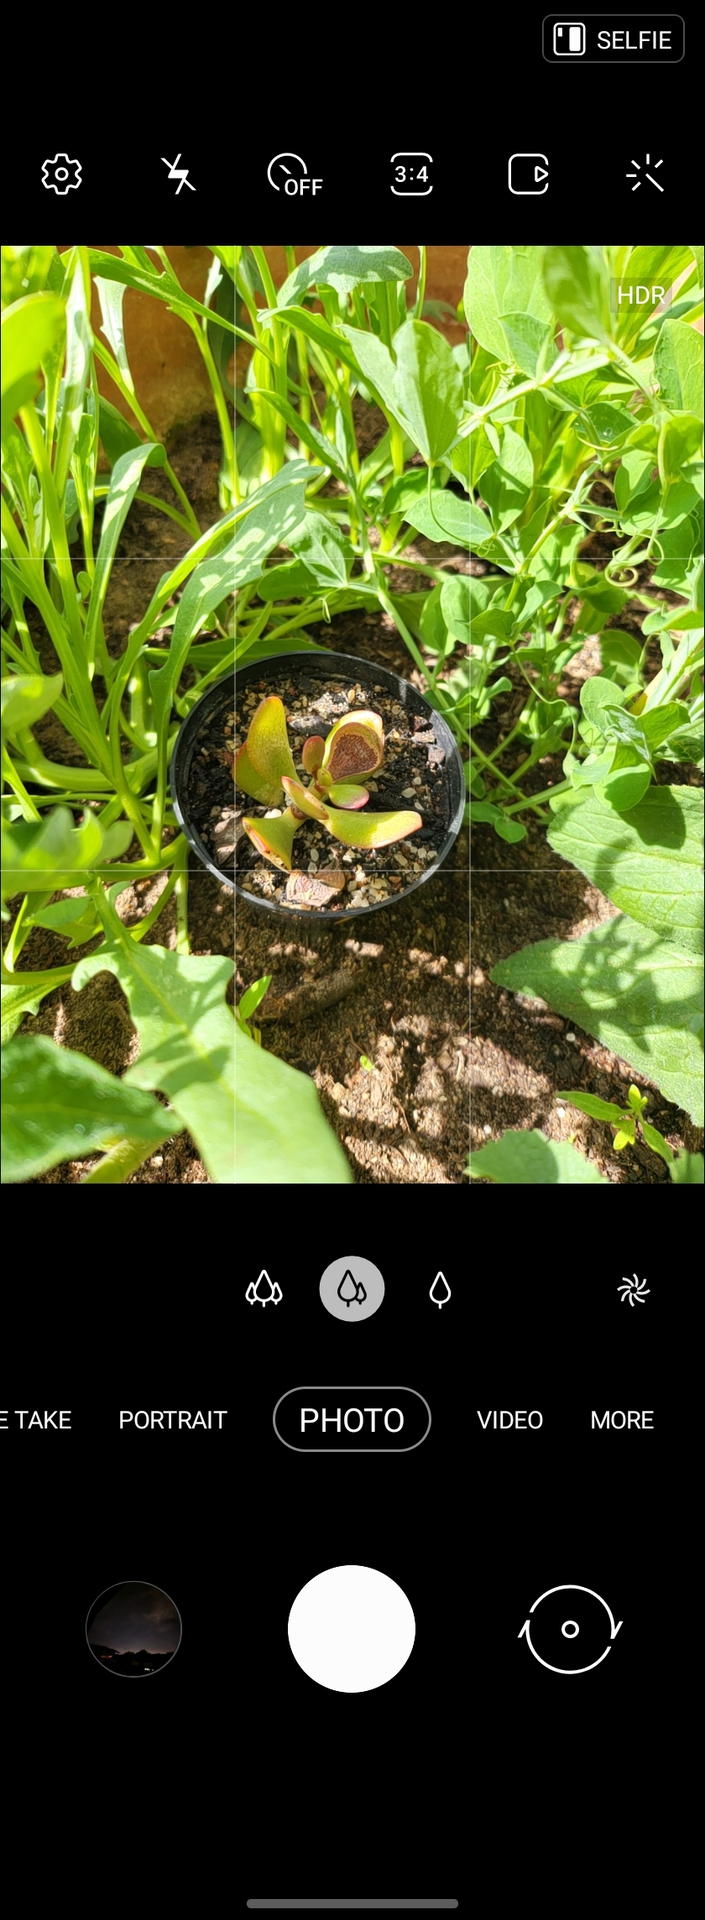 Galaxy Z Fold 3 camera app